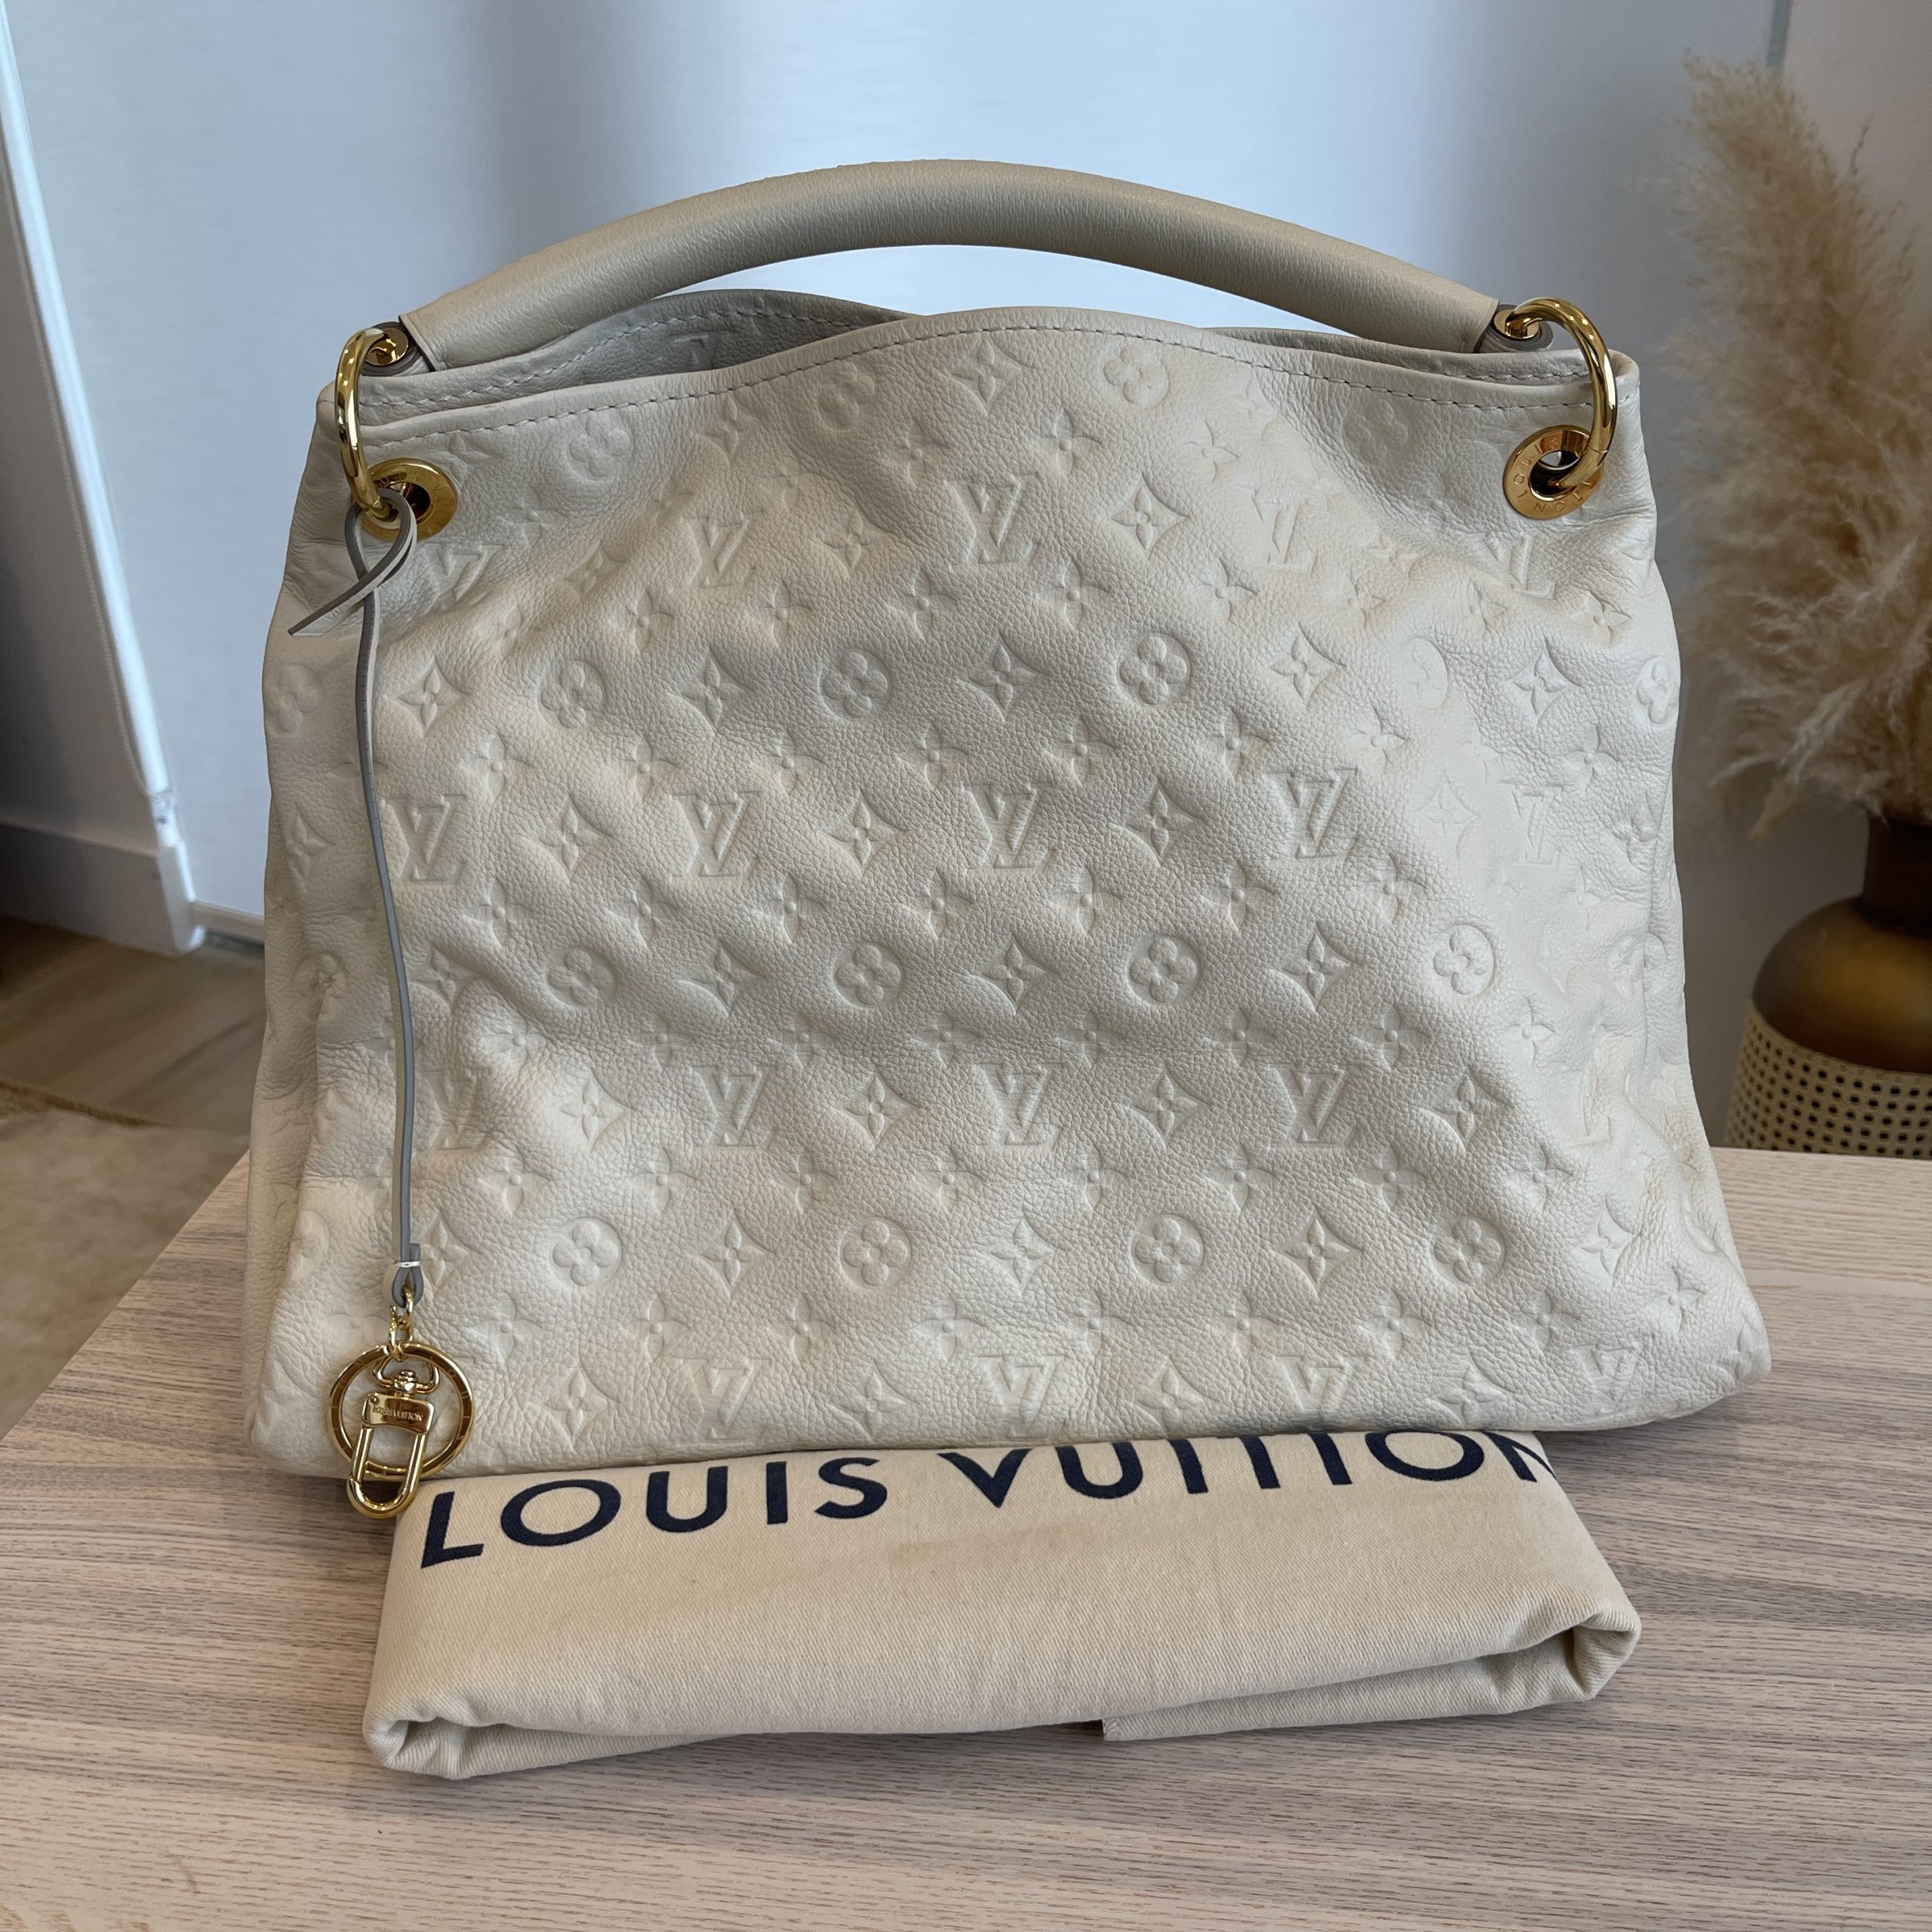 Louis Vuitton / Artsy Empreinte / Creme